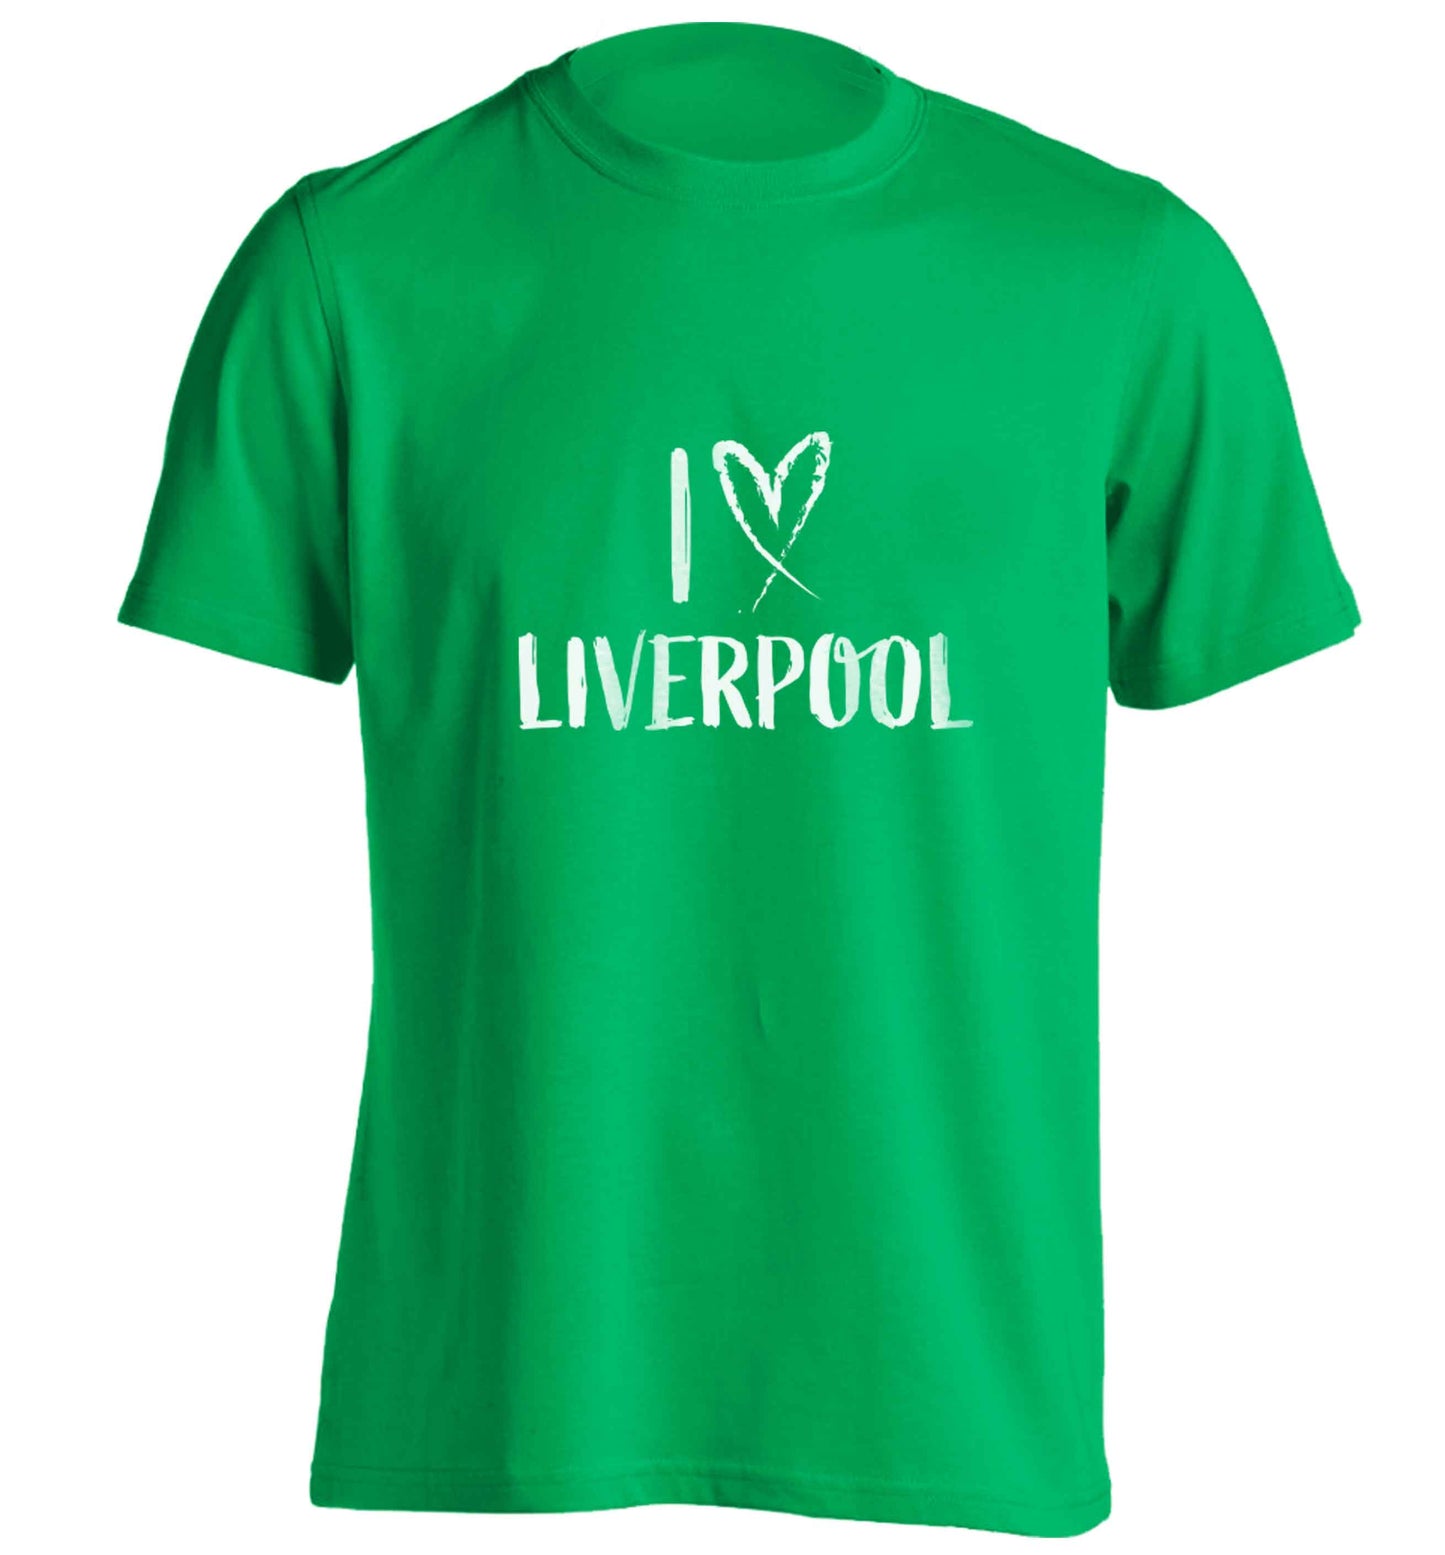 I love Liverpool adults unisex green Tshirt 2XL